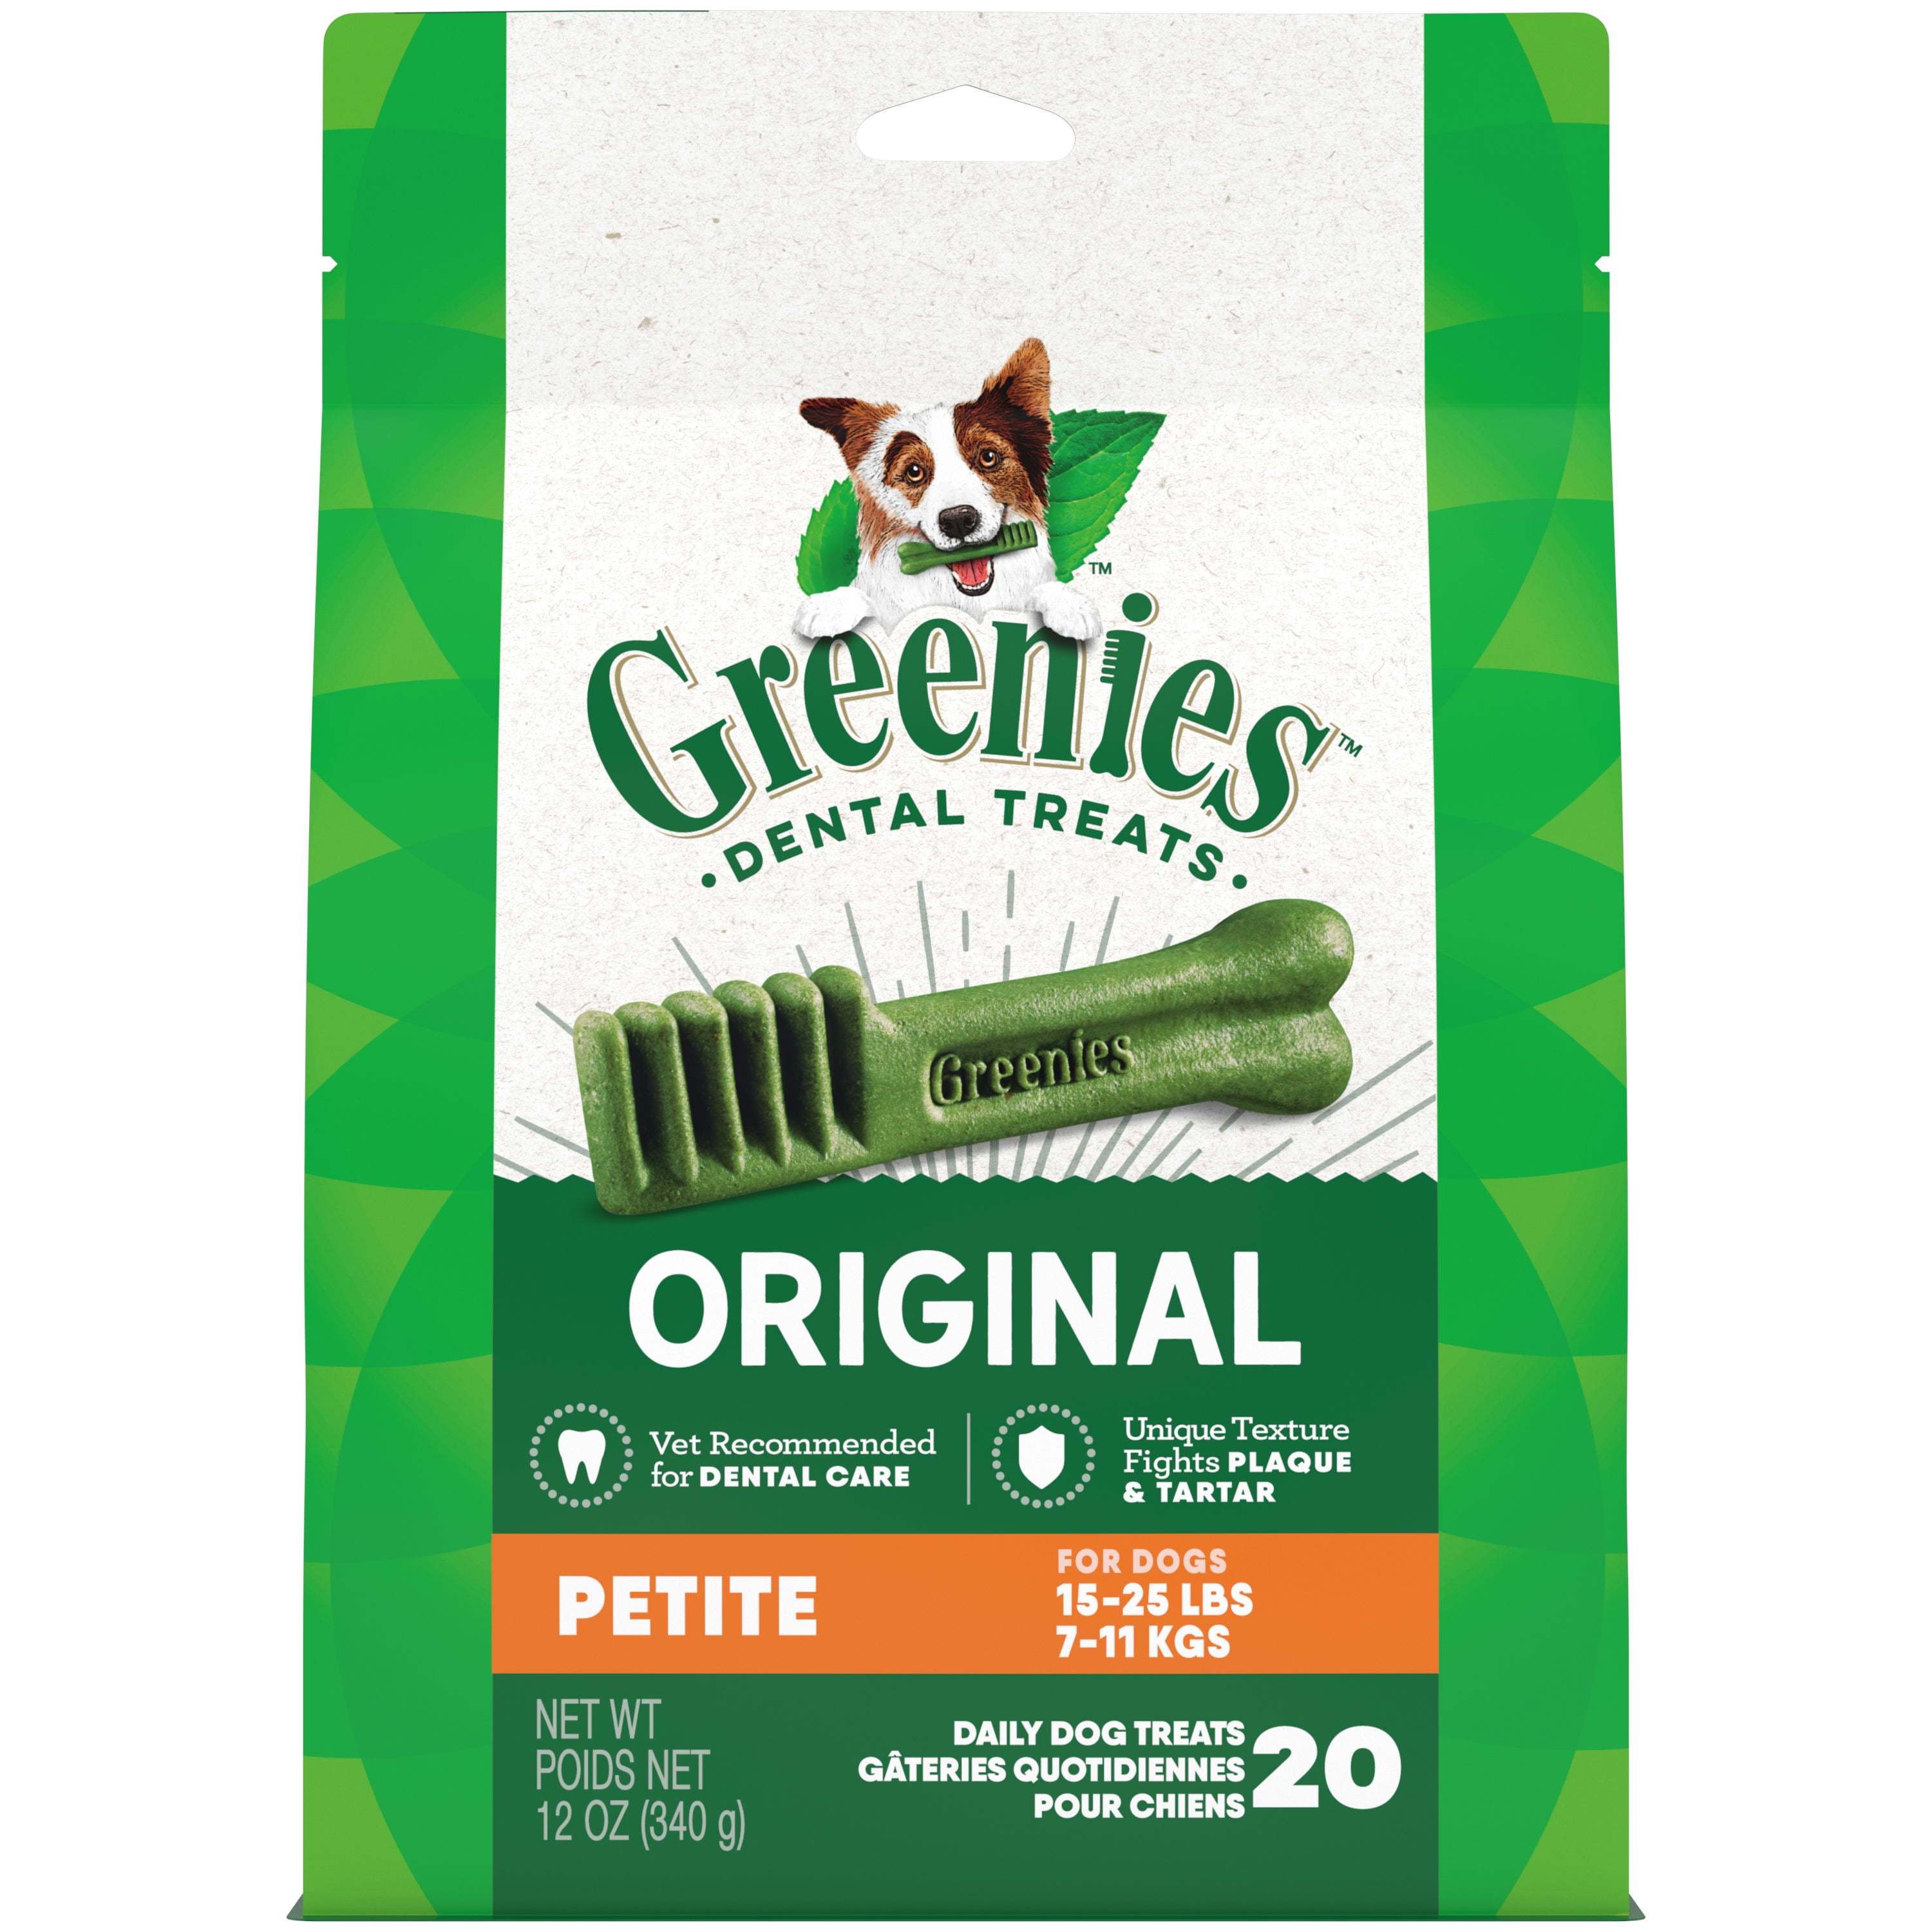 GREENIES Original Flavor PETITE Dental Chew Treats for Dogs, 12 oz. Pack (20 Treats)